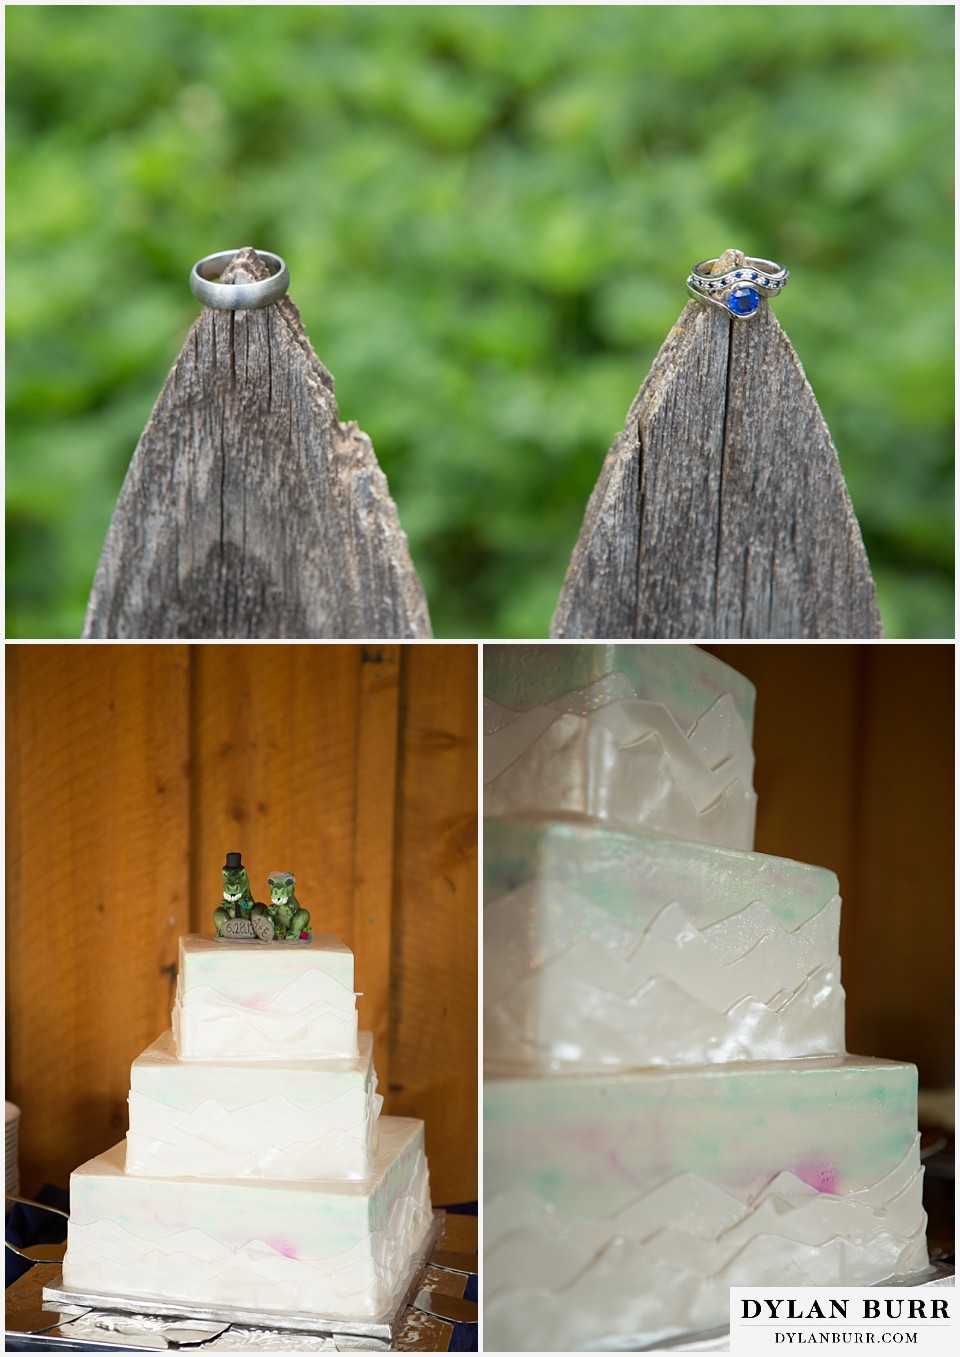 lyons farmette wedding wedding rings on old fence posts wedding cake with dinosaur topper